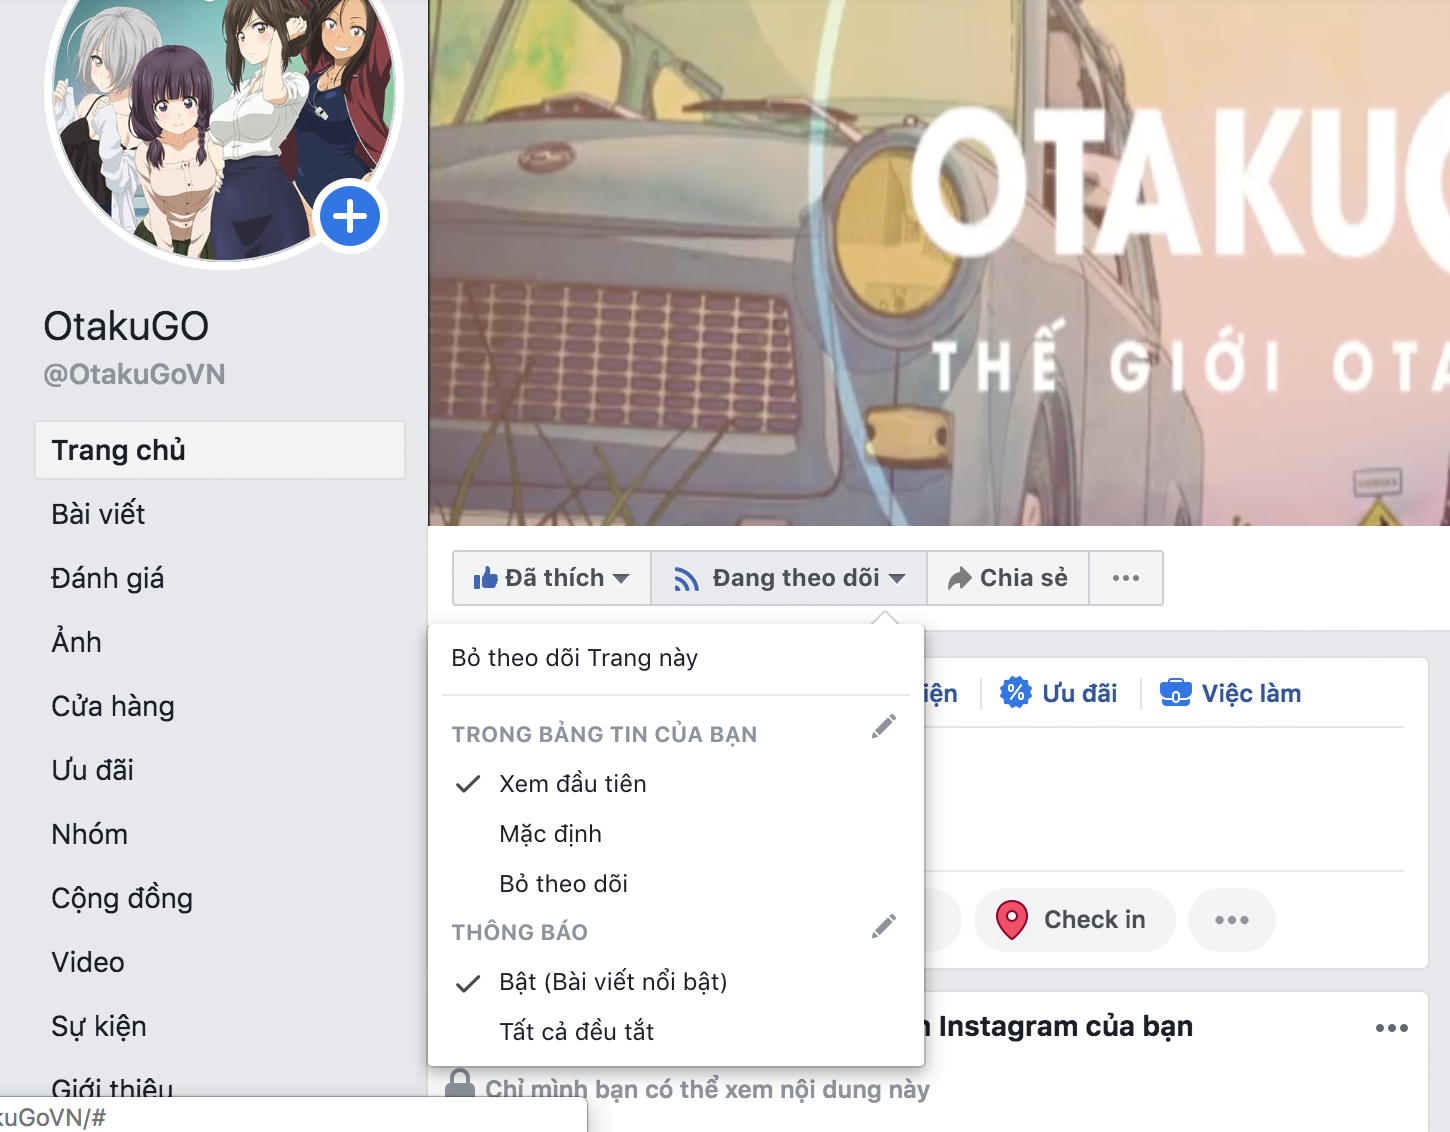 Hướng dẫn bật huy hiệu "Fan Cứng" trên Fanpage OtakuGO